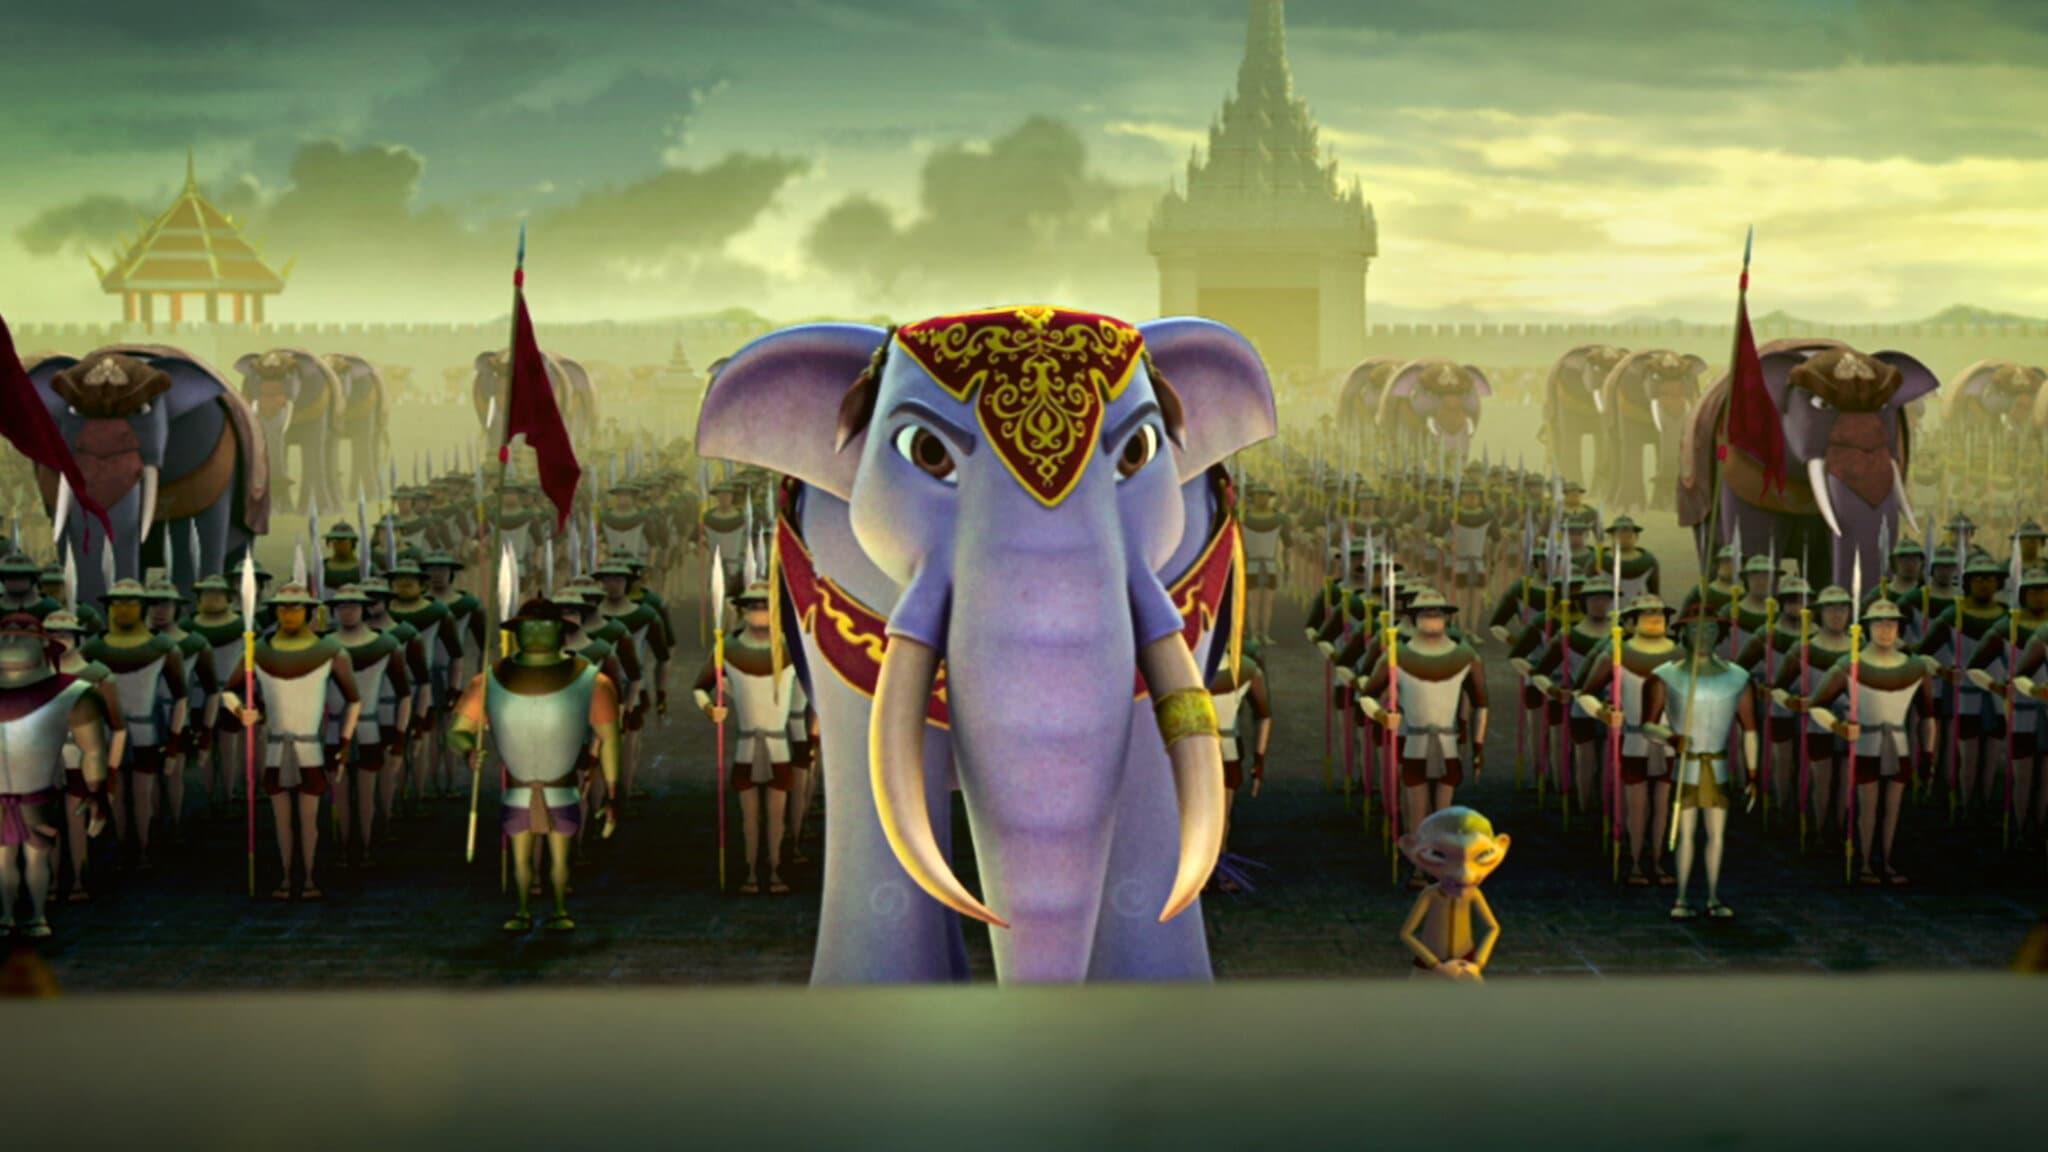 The Blue Elephant 2 backdrop